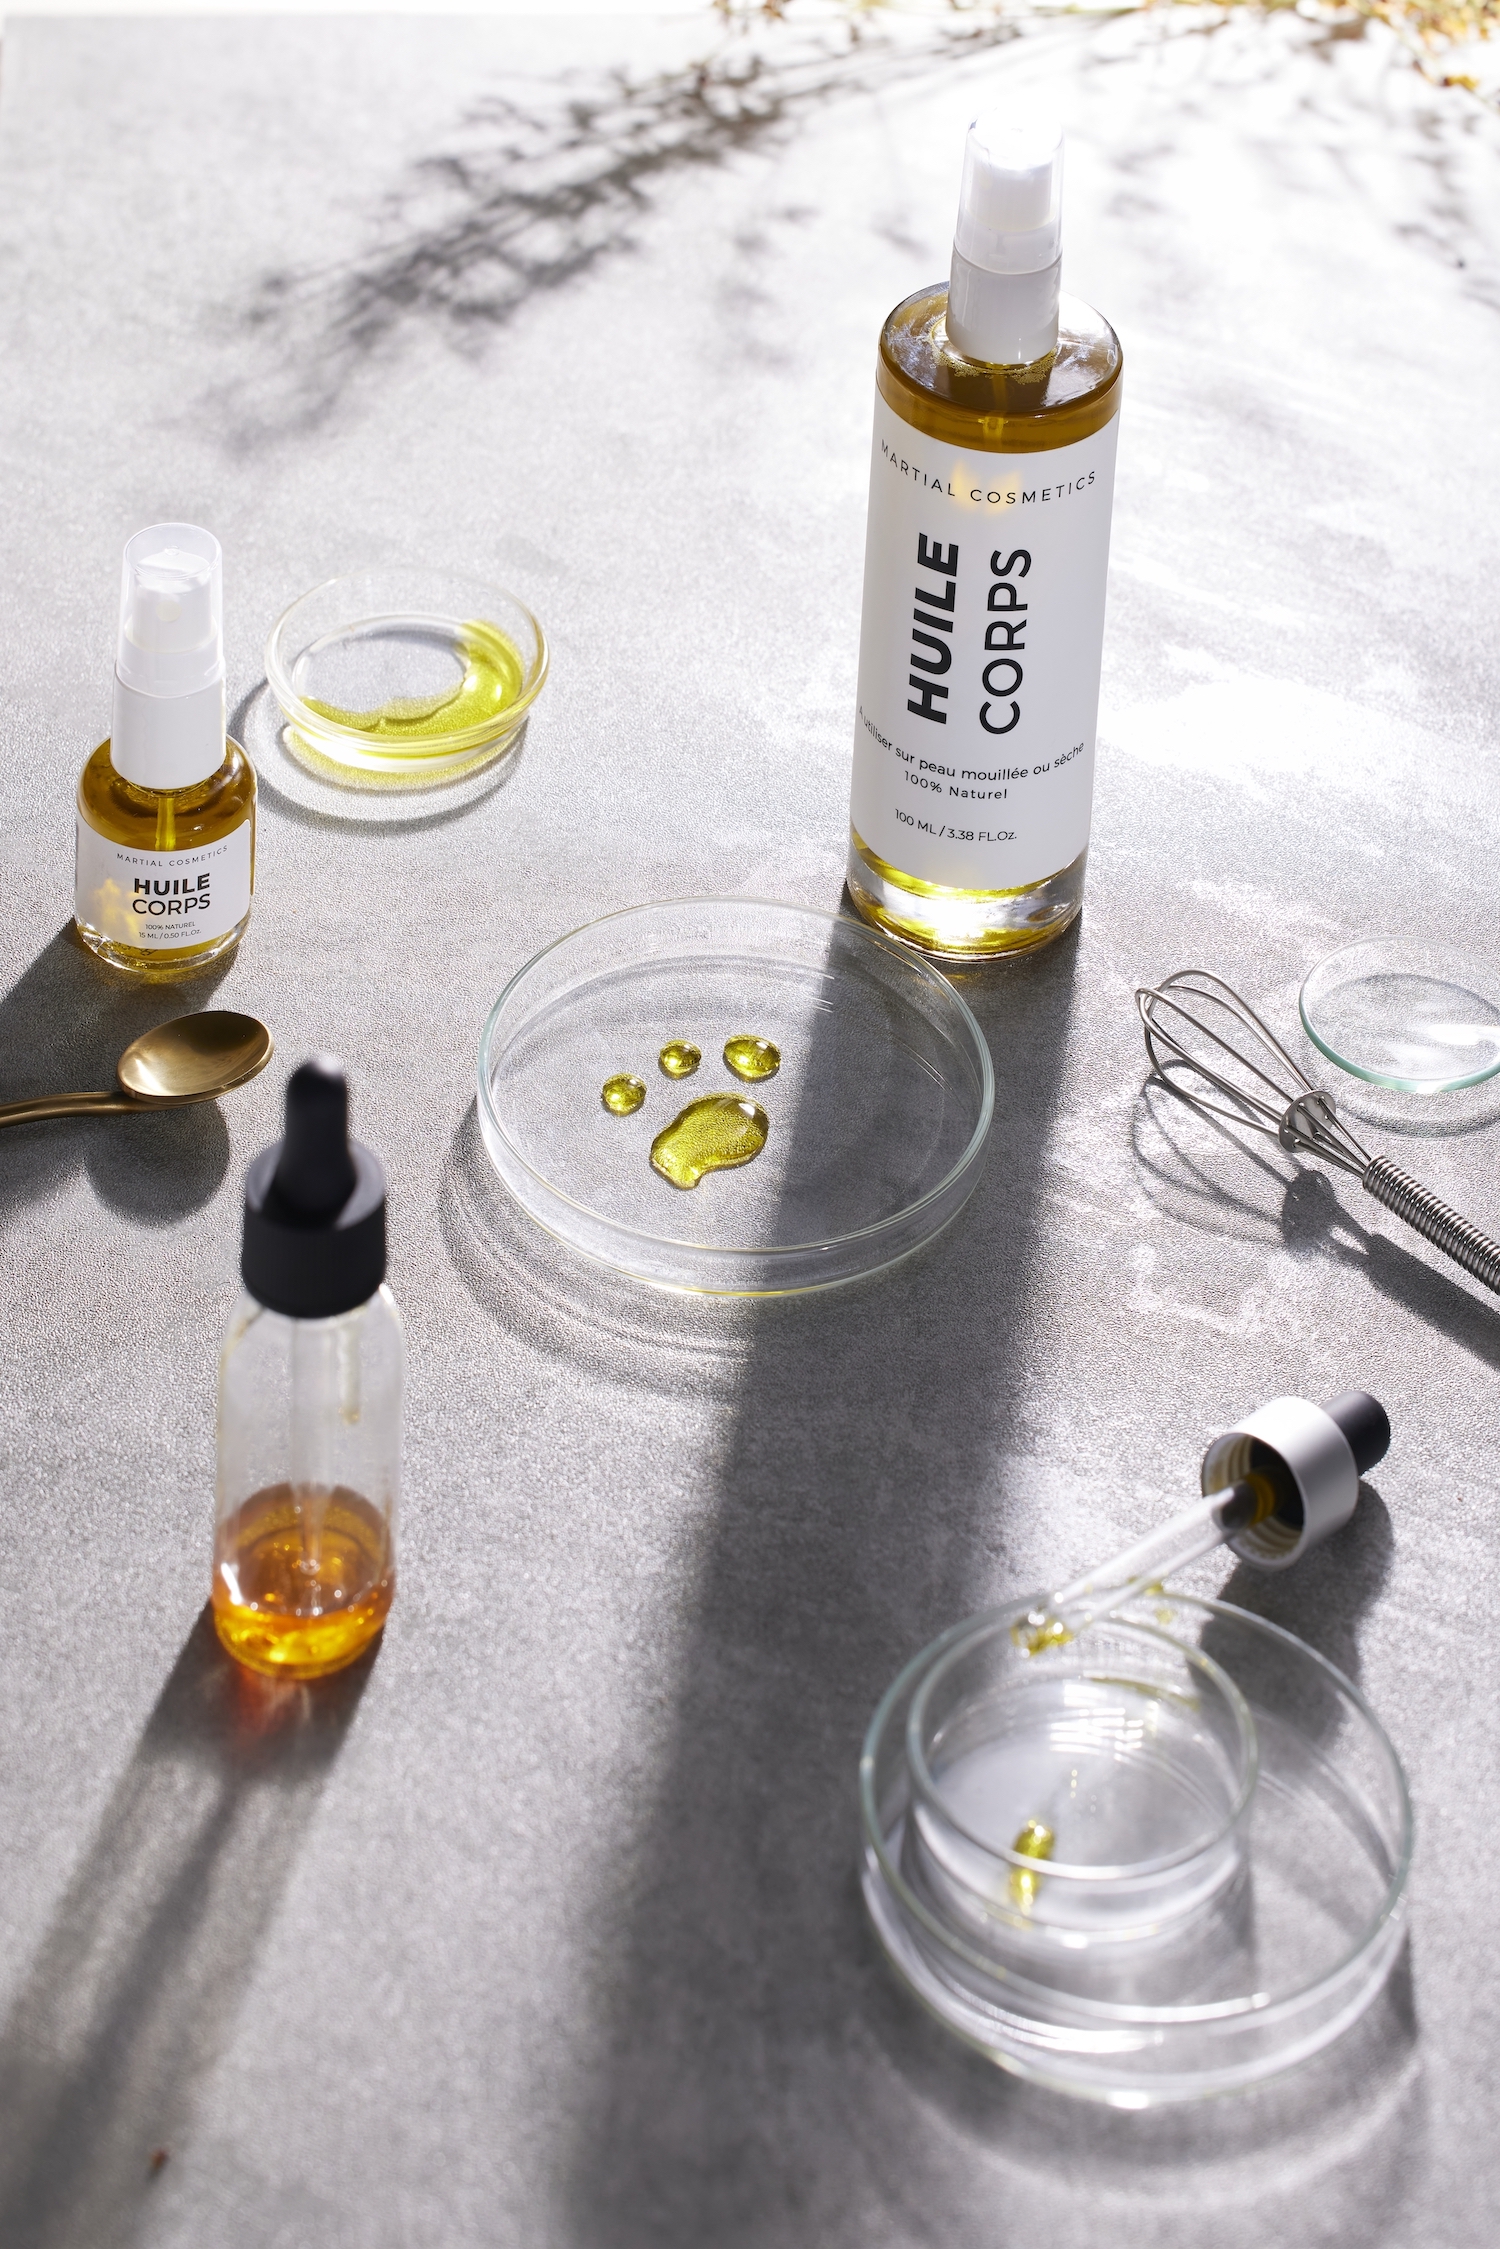 Martial Cosmetics - La composition de l'huile corps